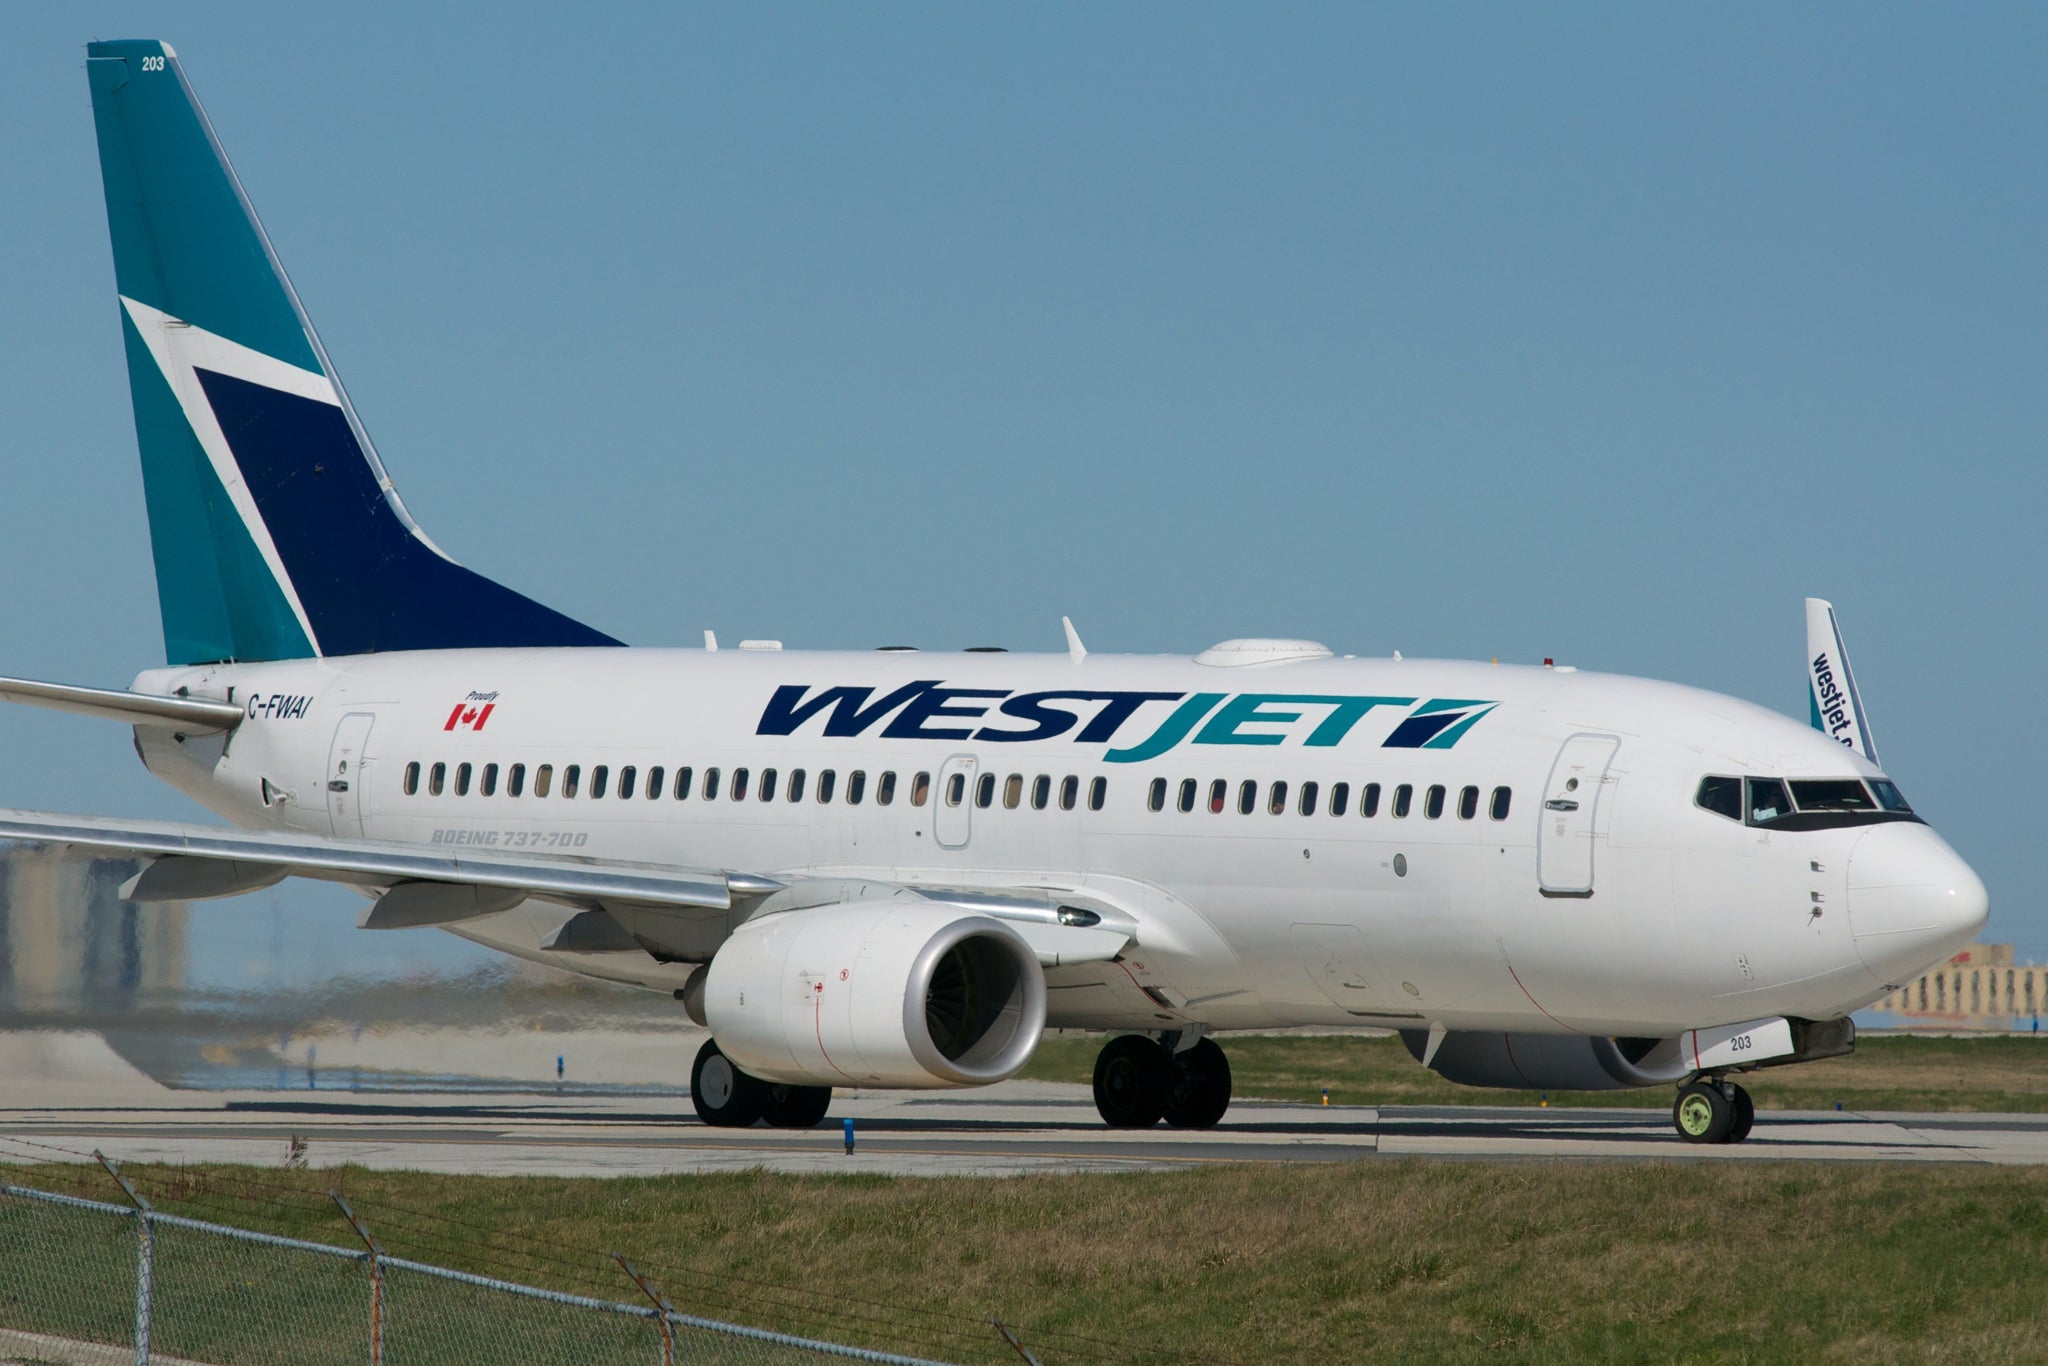 West Jet Westjet 2019 09 26